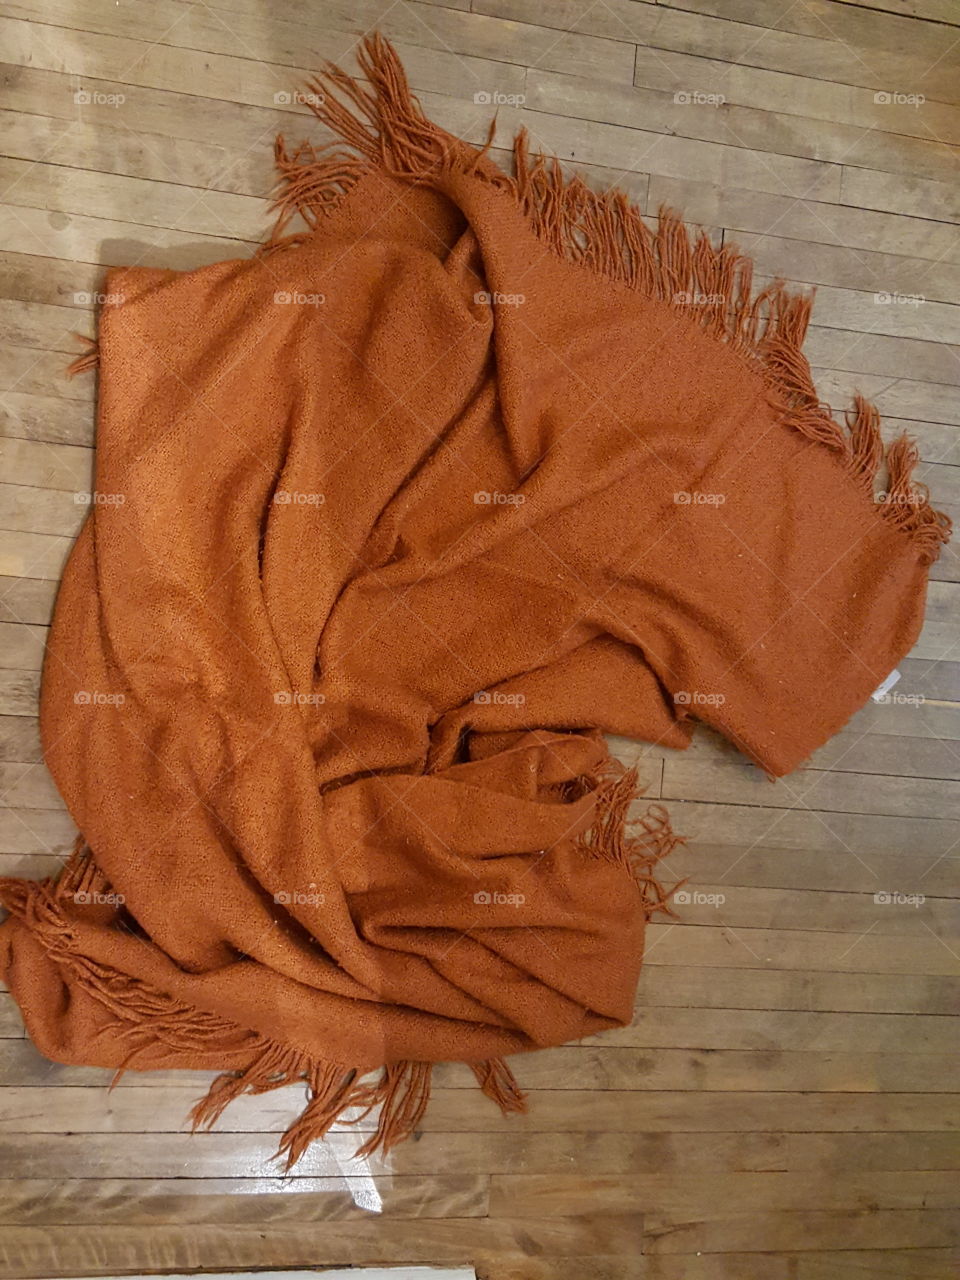 Orange blanket dropped casually onto hardwood floor.